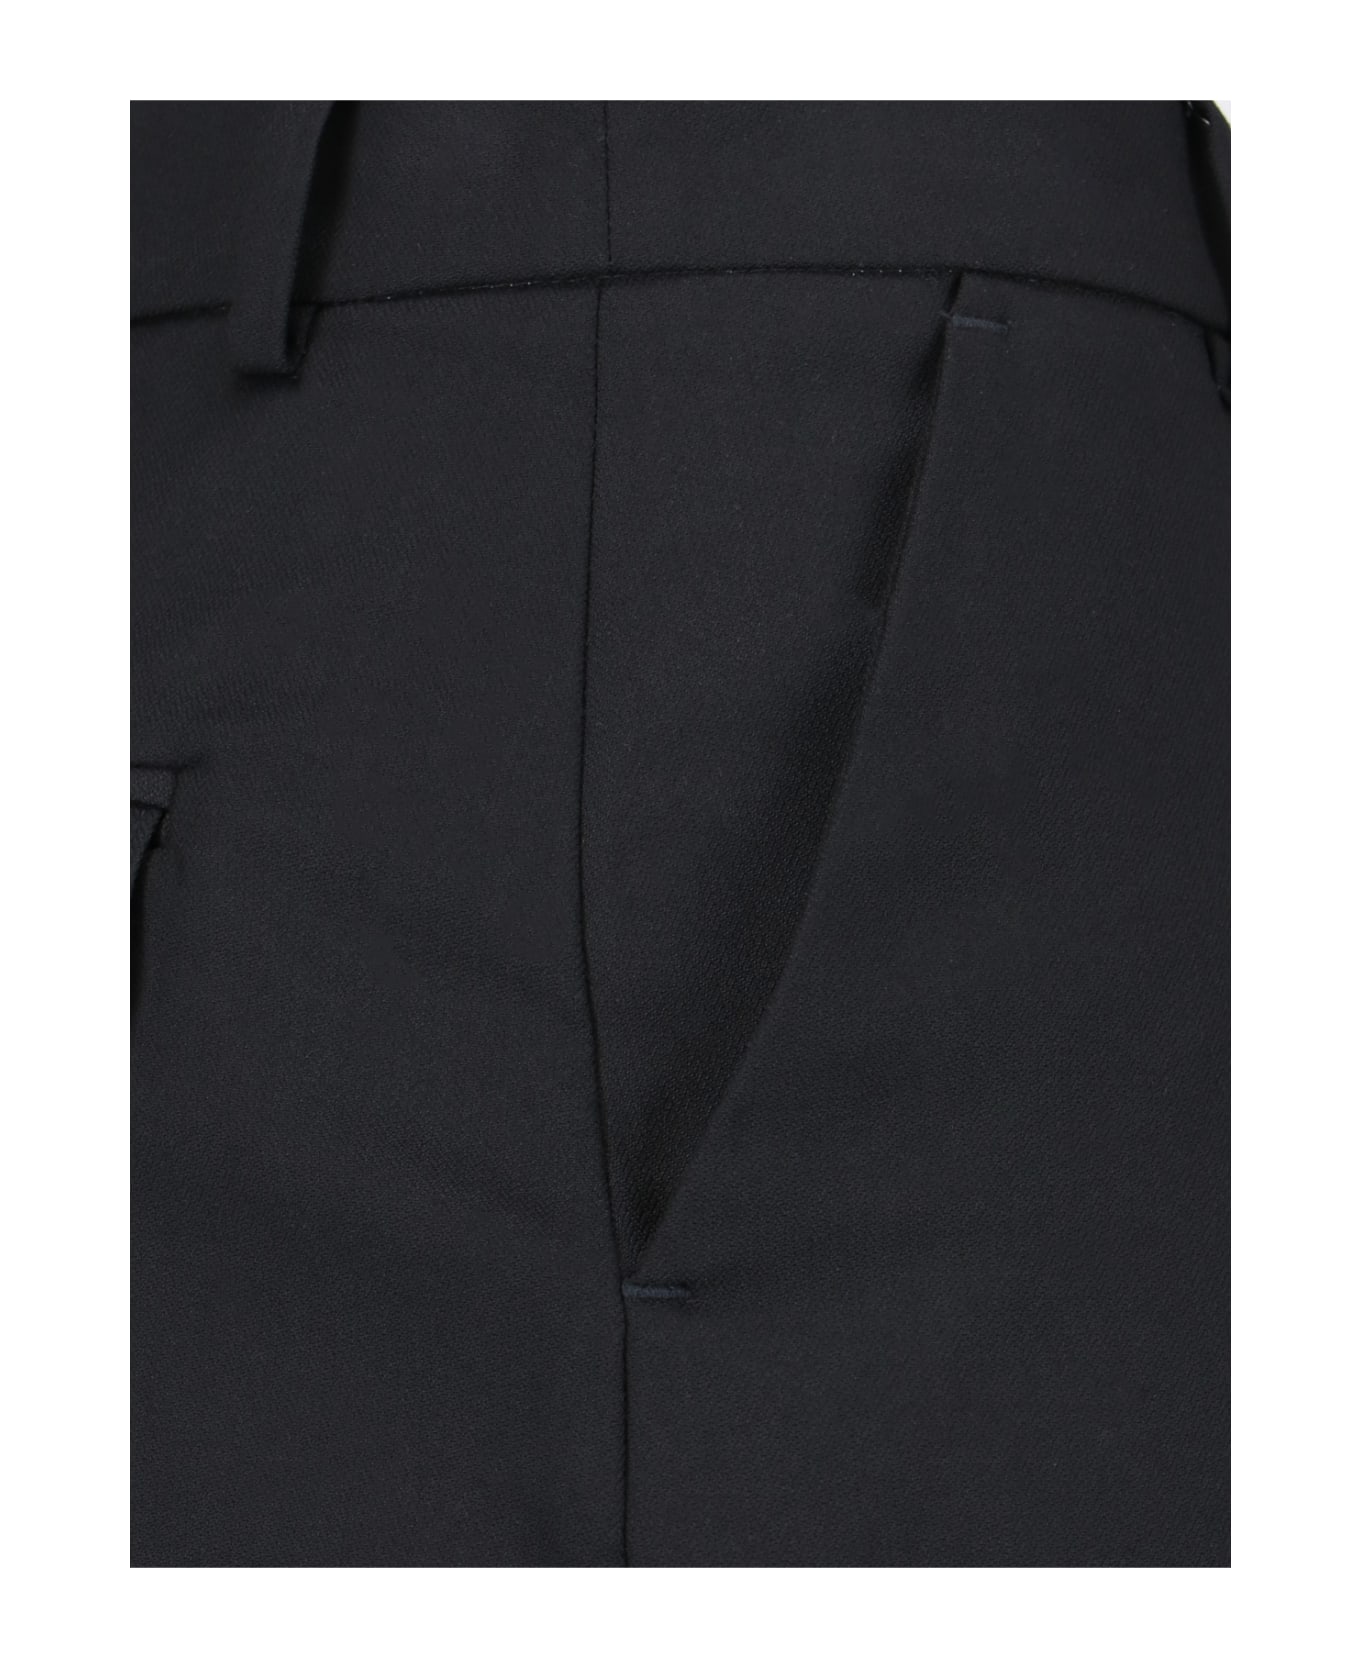 The Garment 'pluto' Midi Skirt - Black  